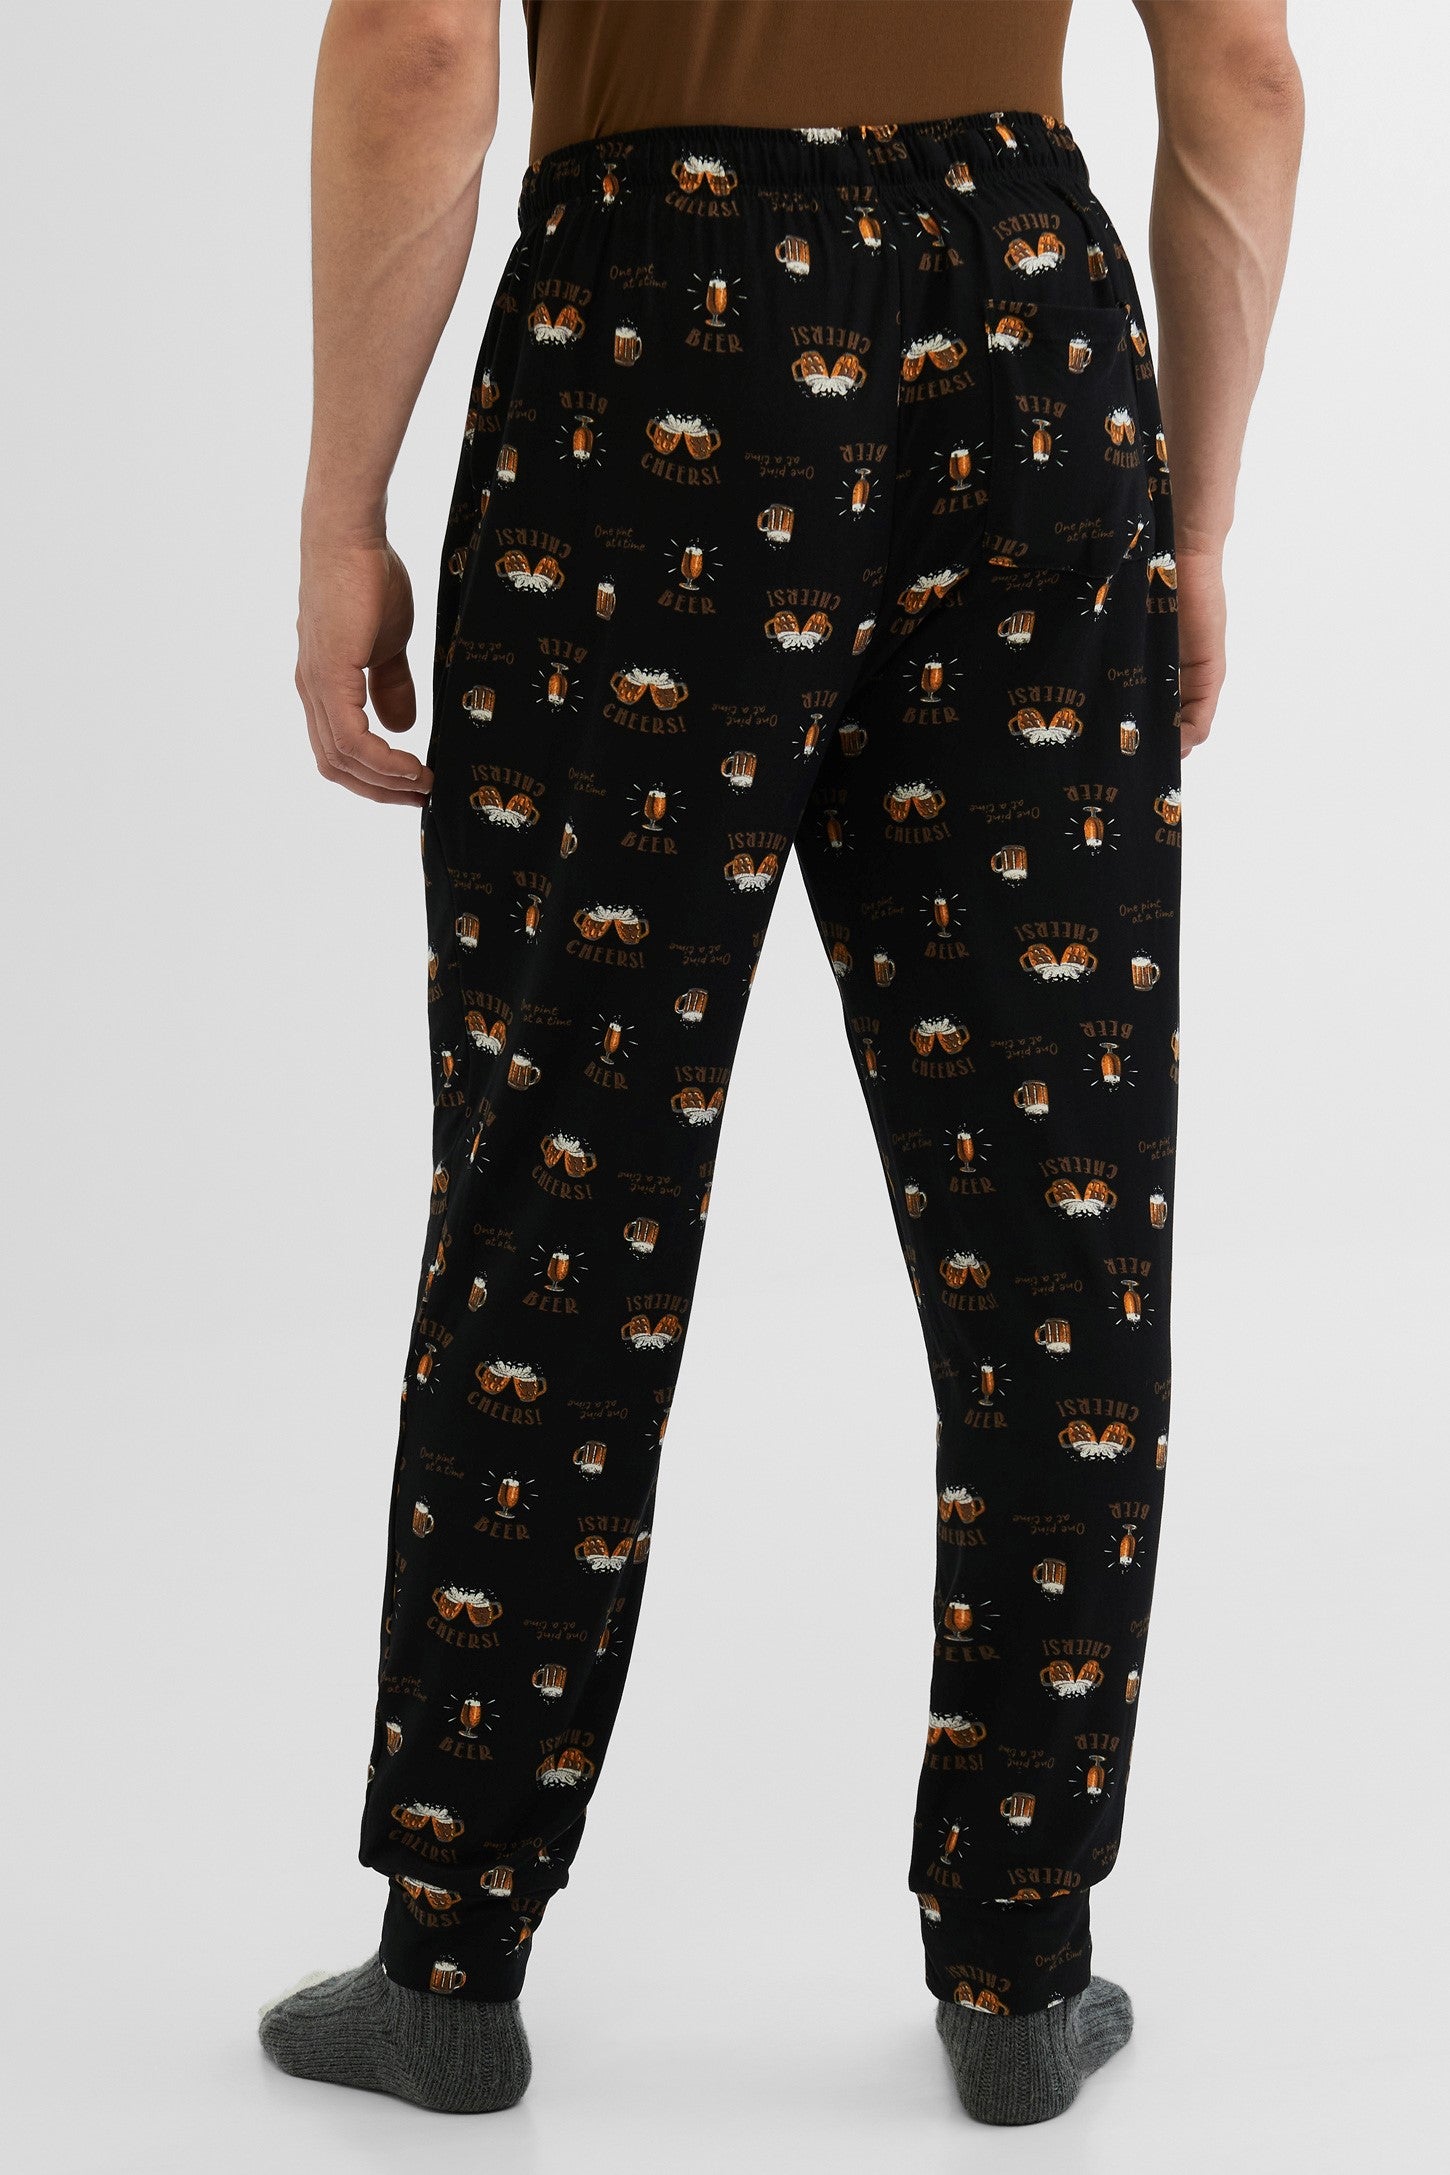 Pantalon pyjama jogger, 2/50$ - Homme && COMBO NOIR